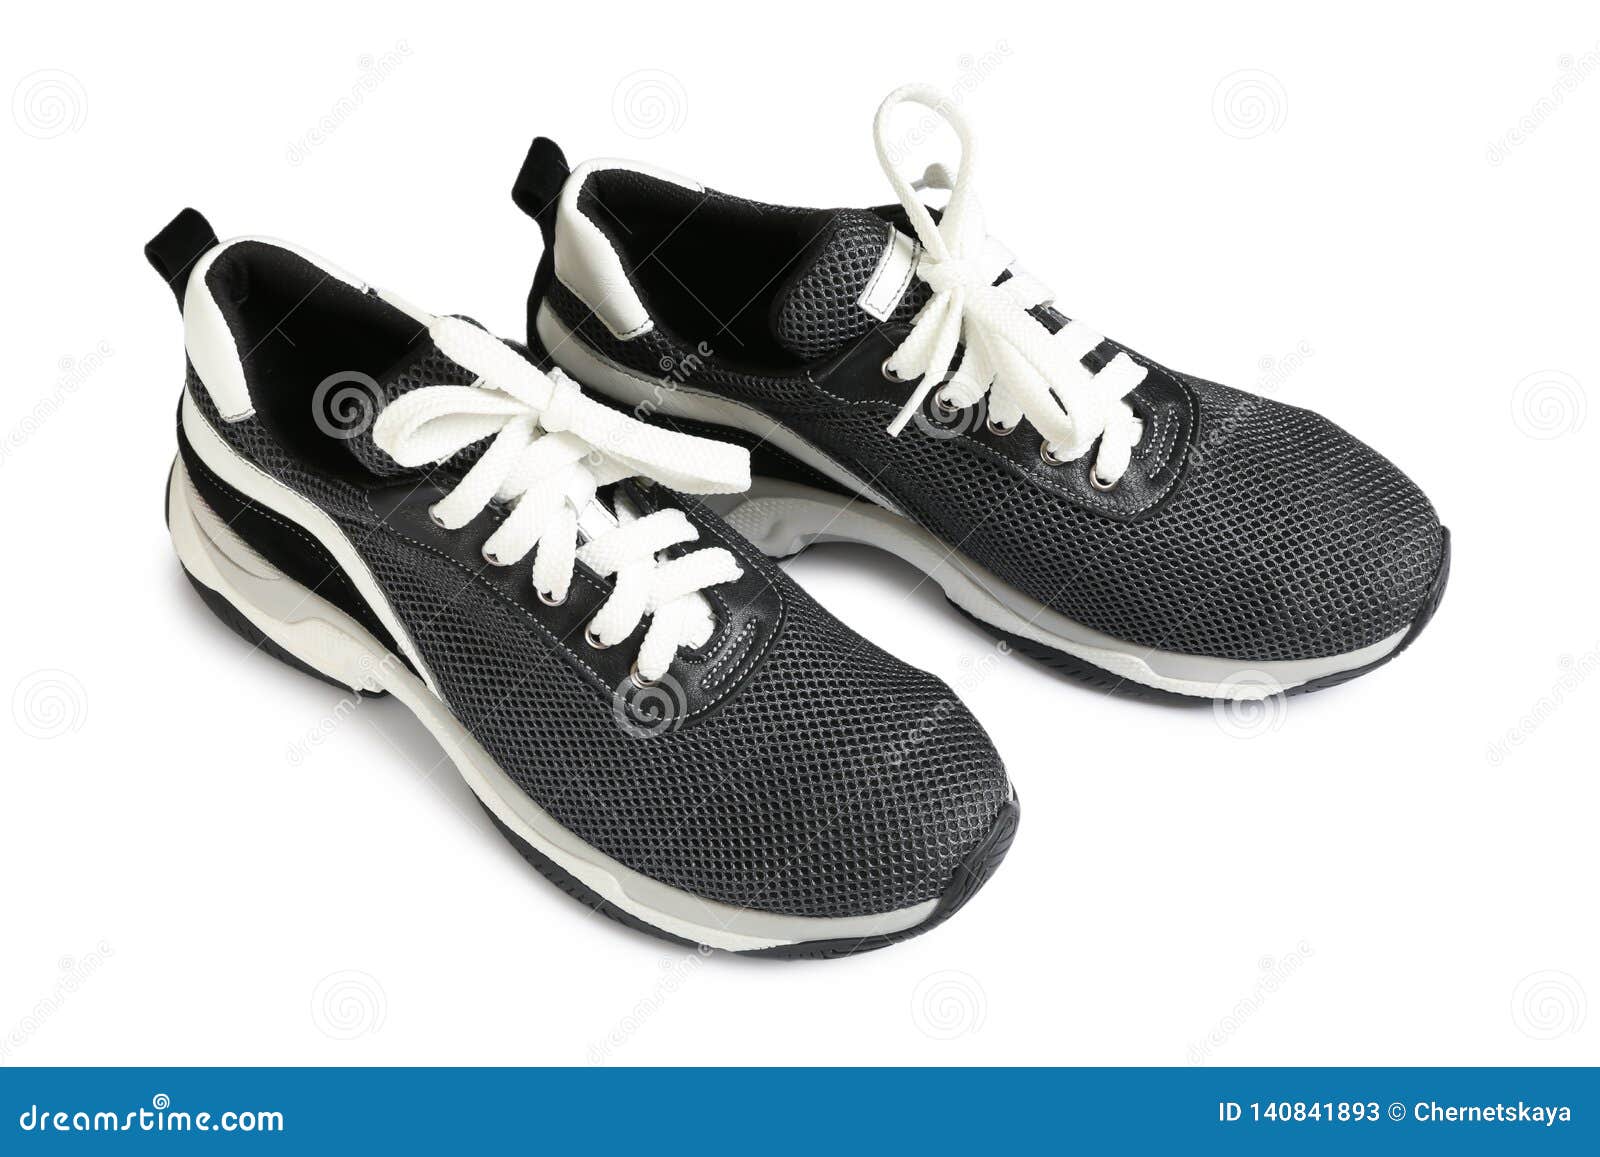 Pair of Stylish Modern Training Shoes Stock Image - Image of foot ...